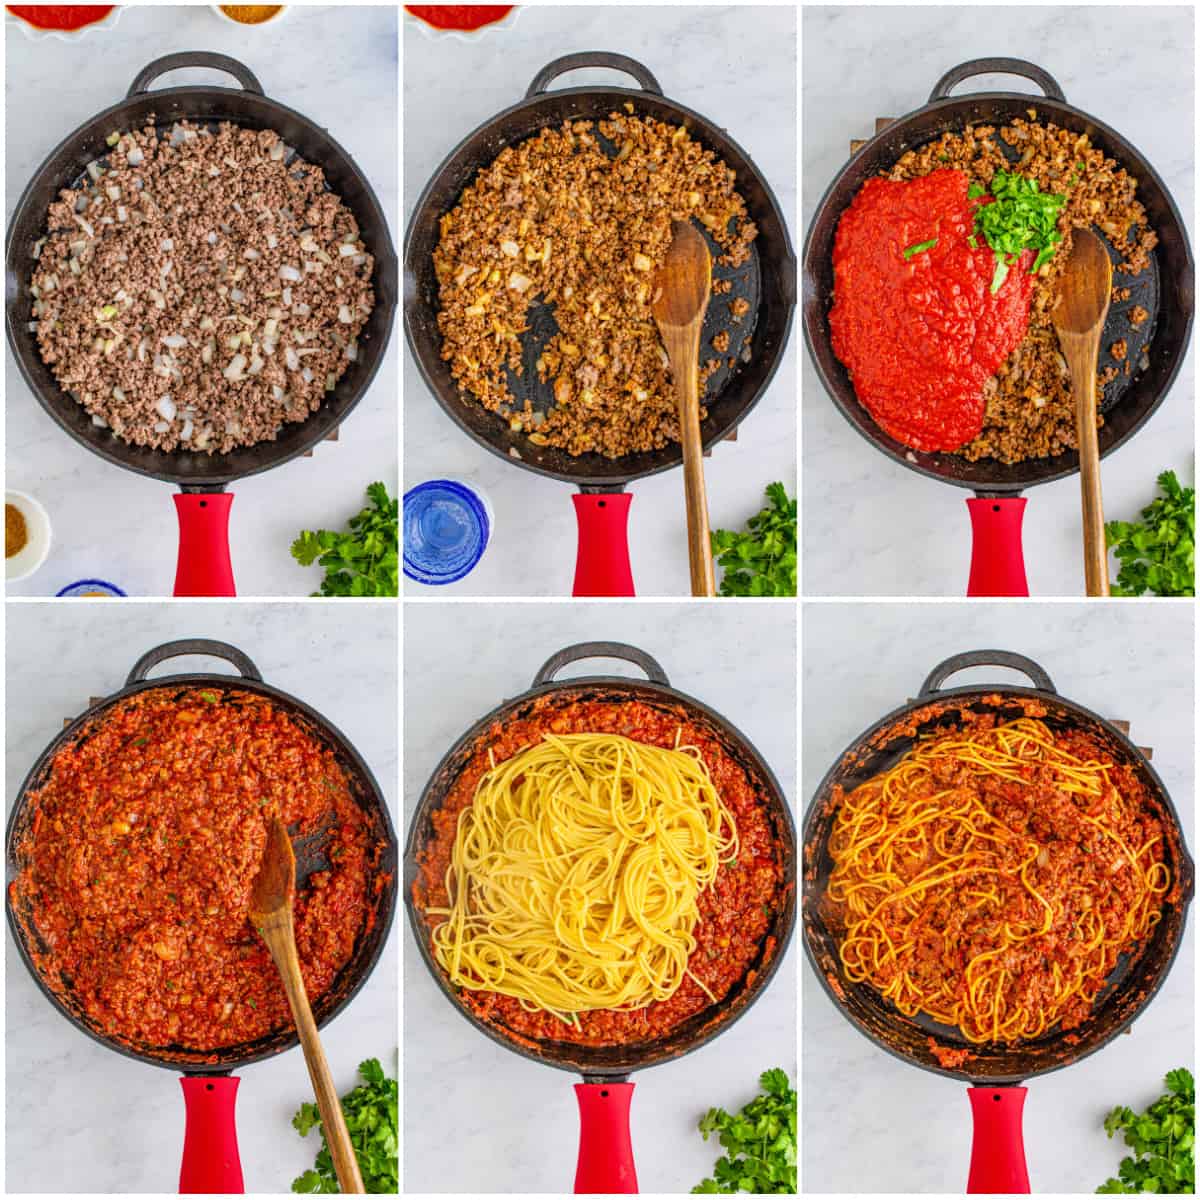 Step by step photos on how to make Taco Spaghetti.